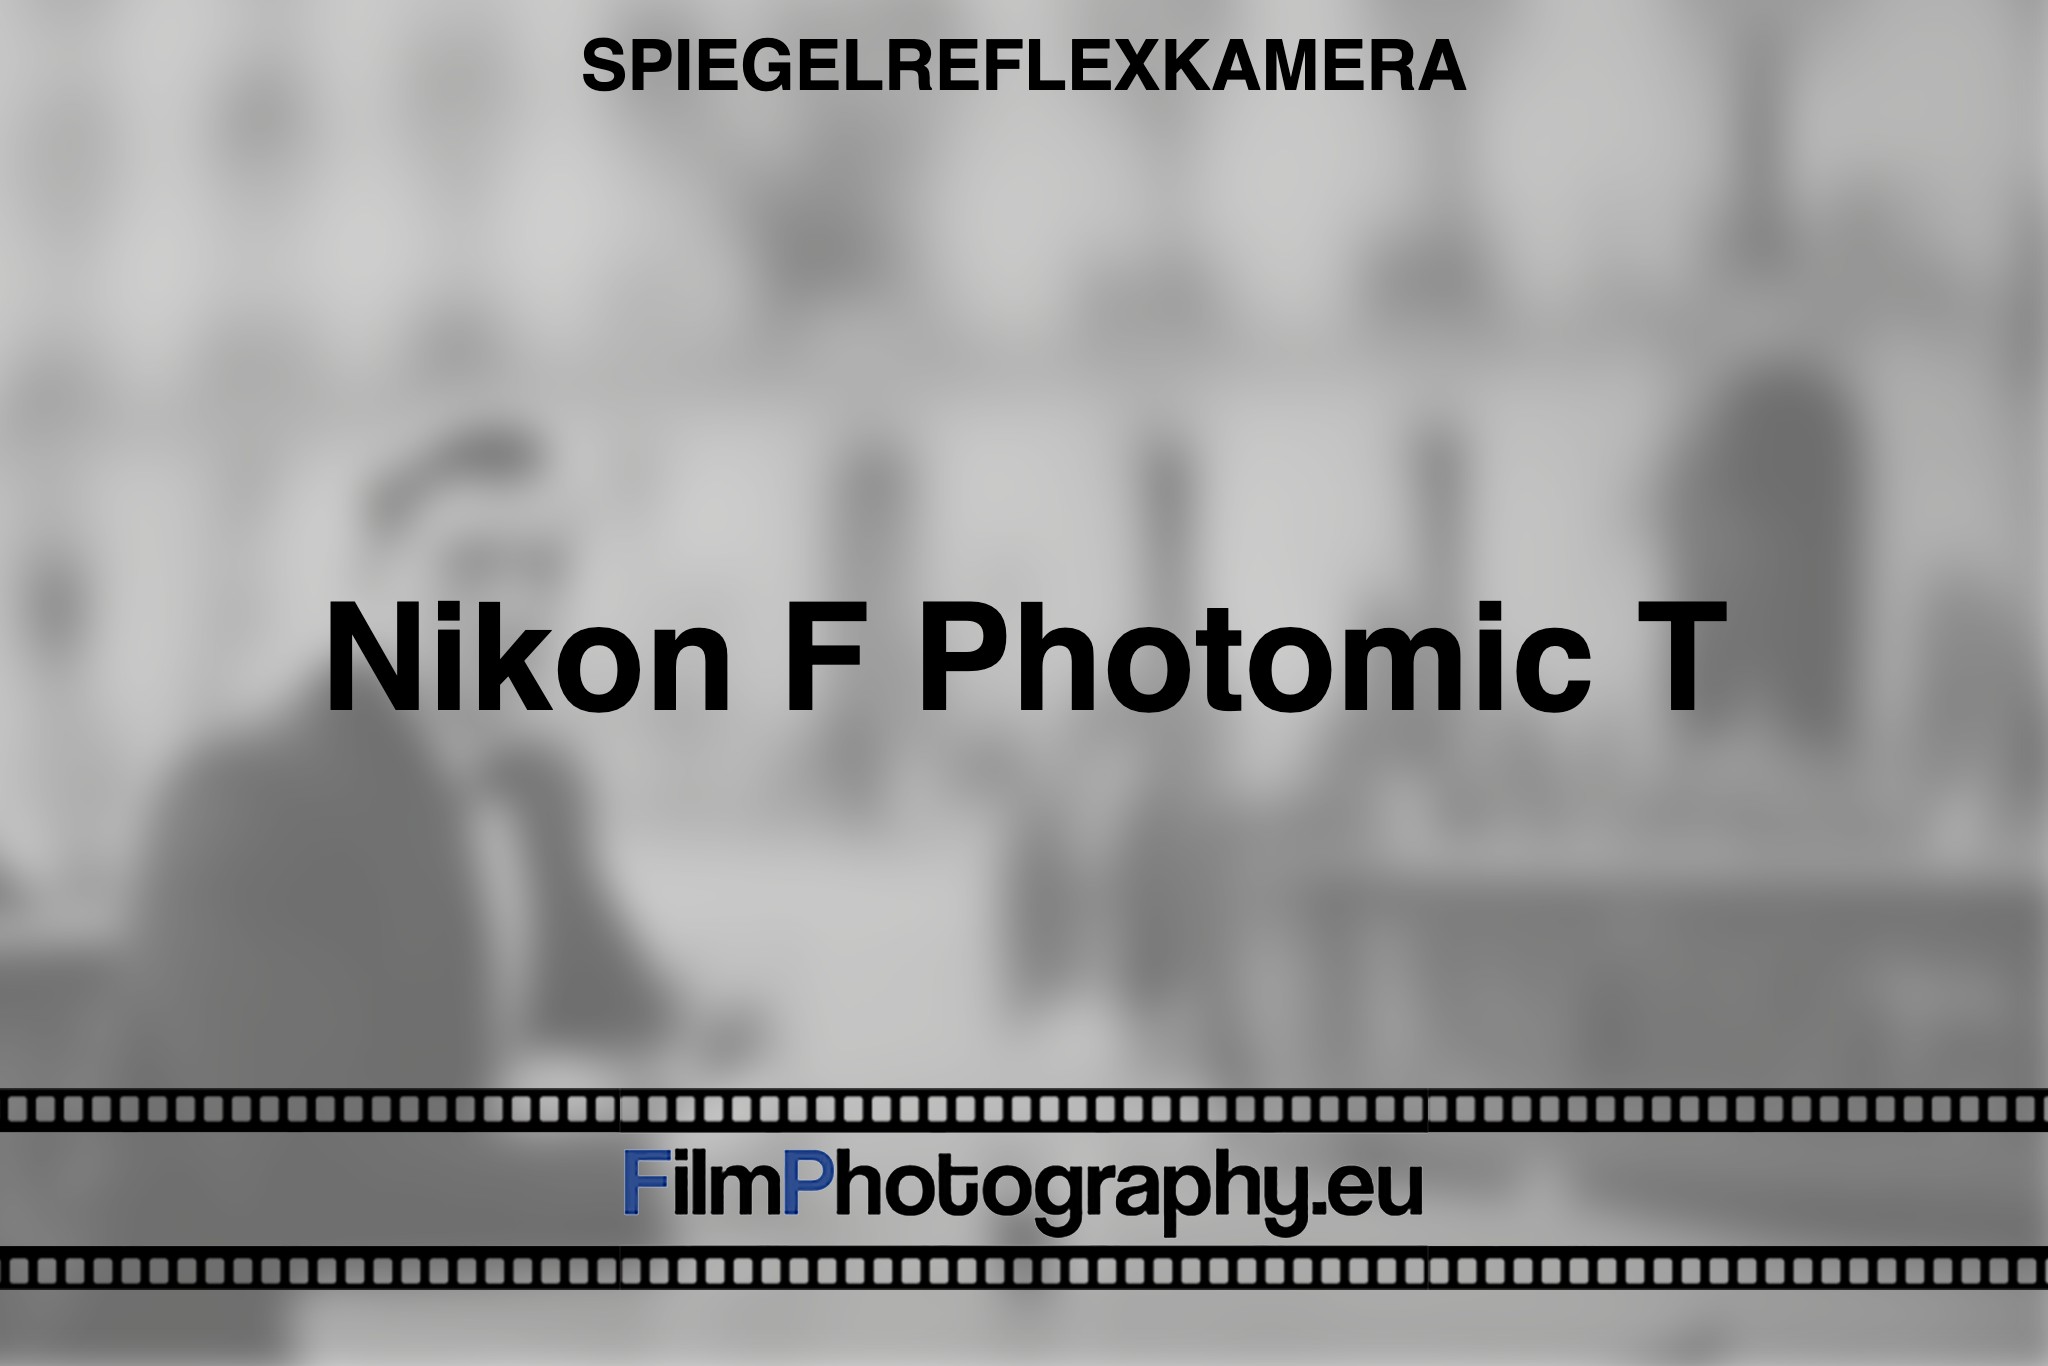 nikon-f-photomic-t-spiegelreflexkamera-bnv